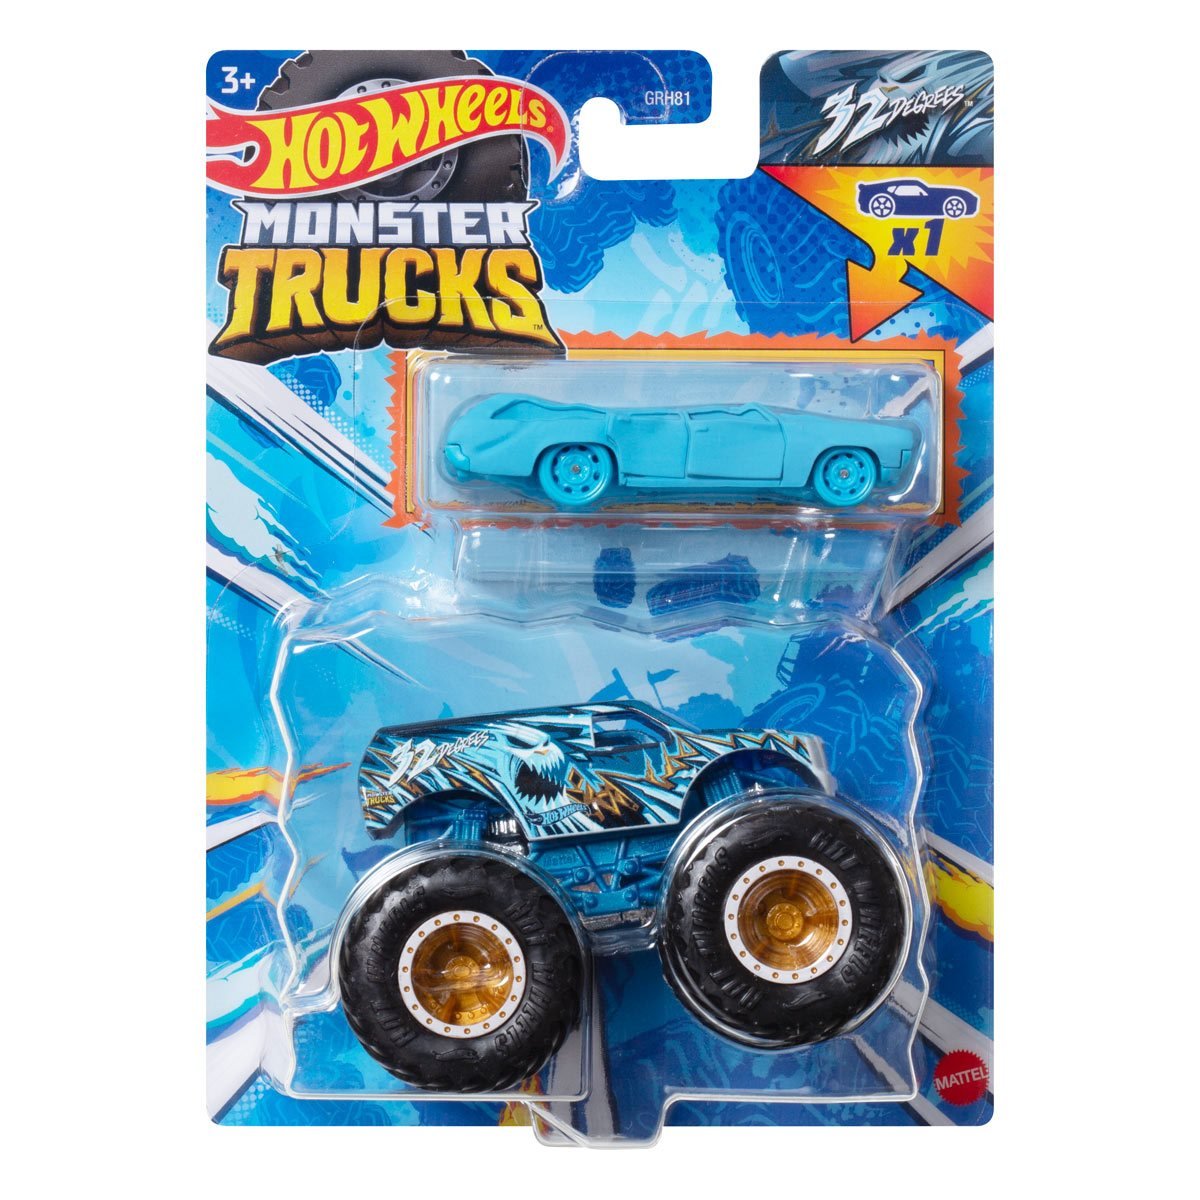 Hot Wheels Monster Trucks Demolition Doubles 1:64 Scale Mix 1 2